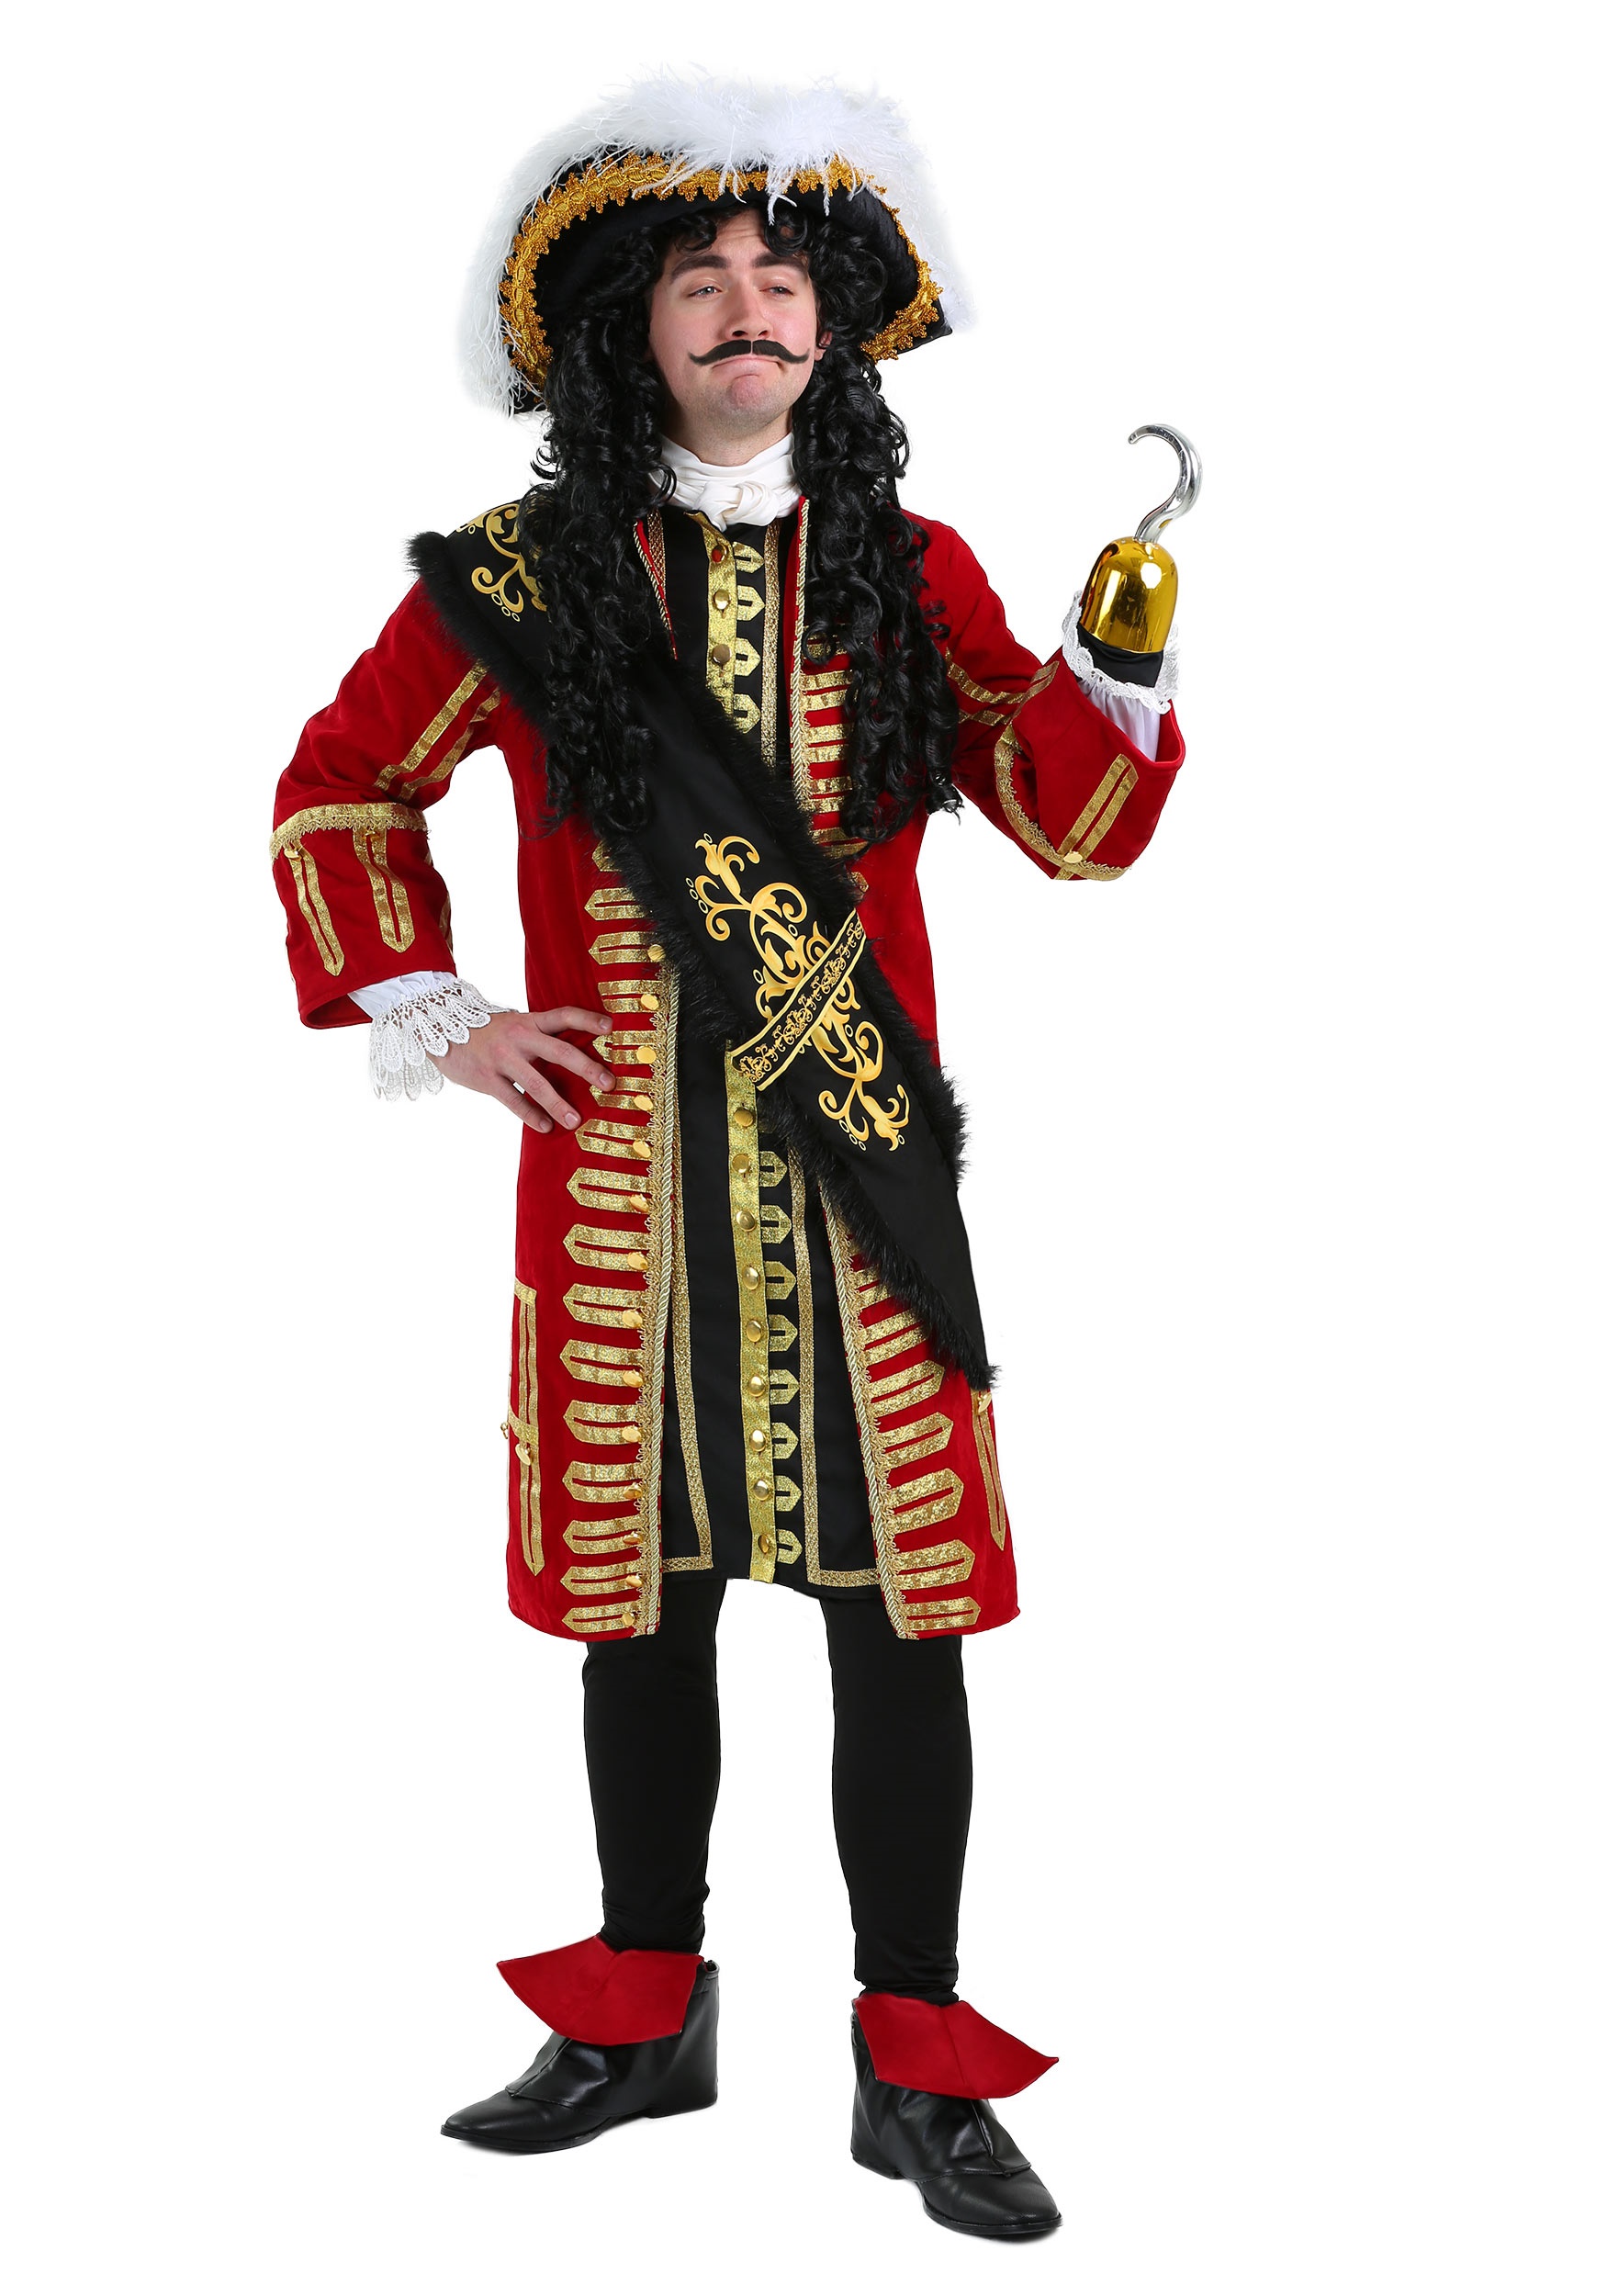 captain hook costume dustin hoffman